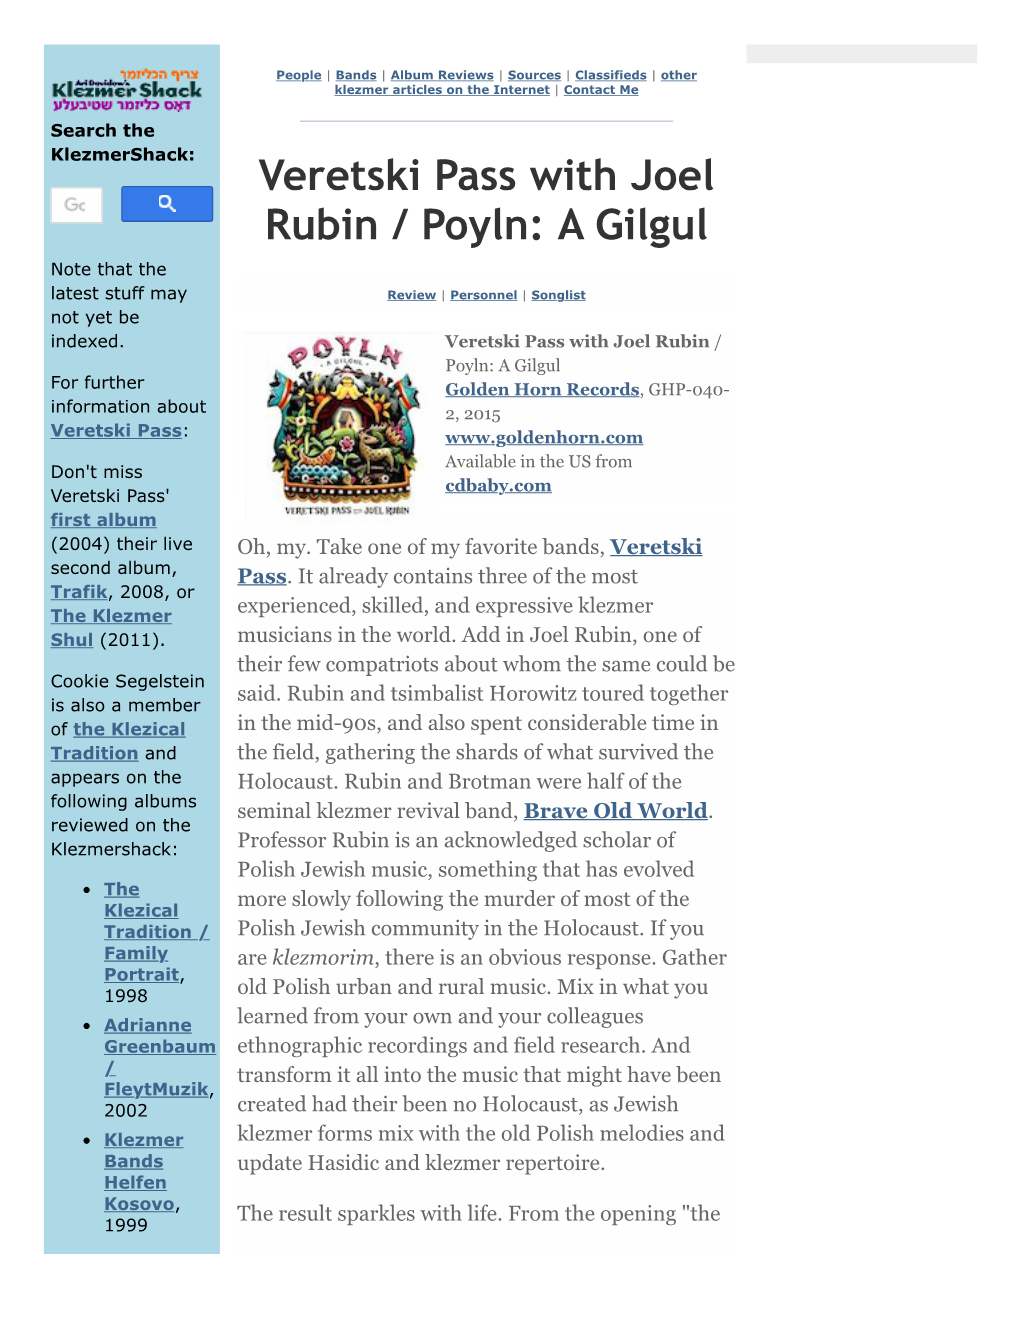 CD Review: Veretski Pass with Joel Rubin / Poyln: a Gilgul